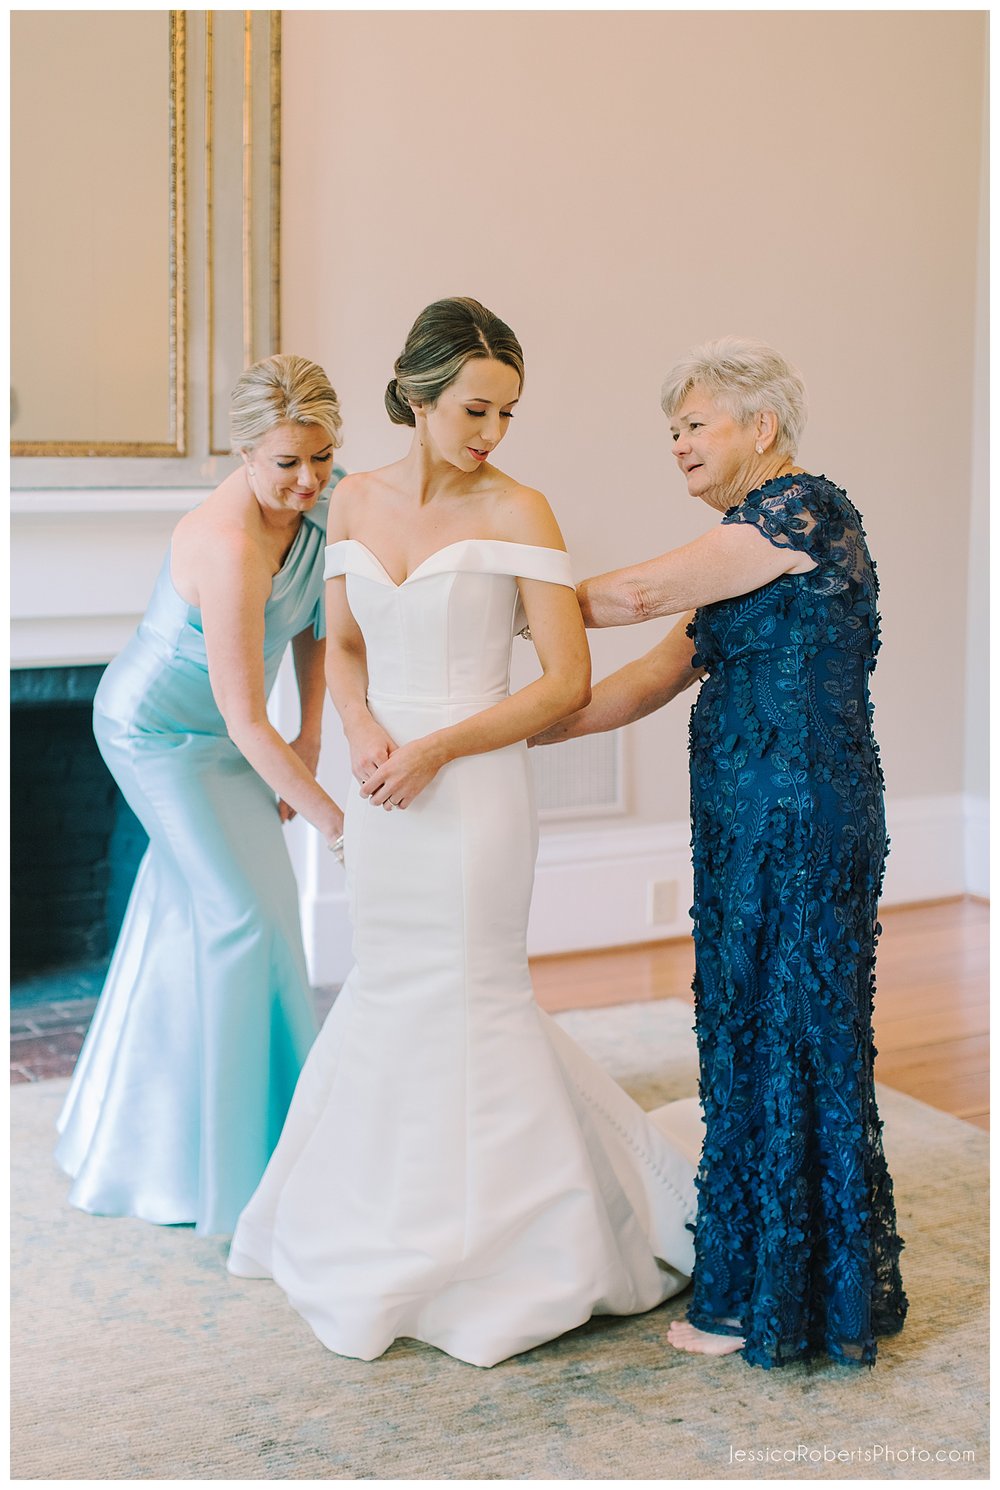 Lace-House-Wedding-Jessica-Roberts-Photography_0020.jpg